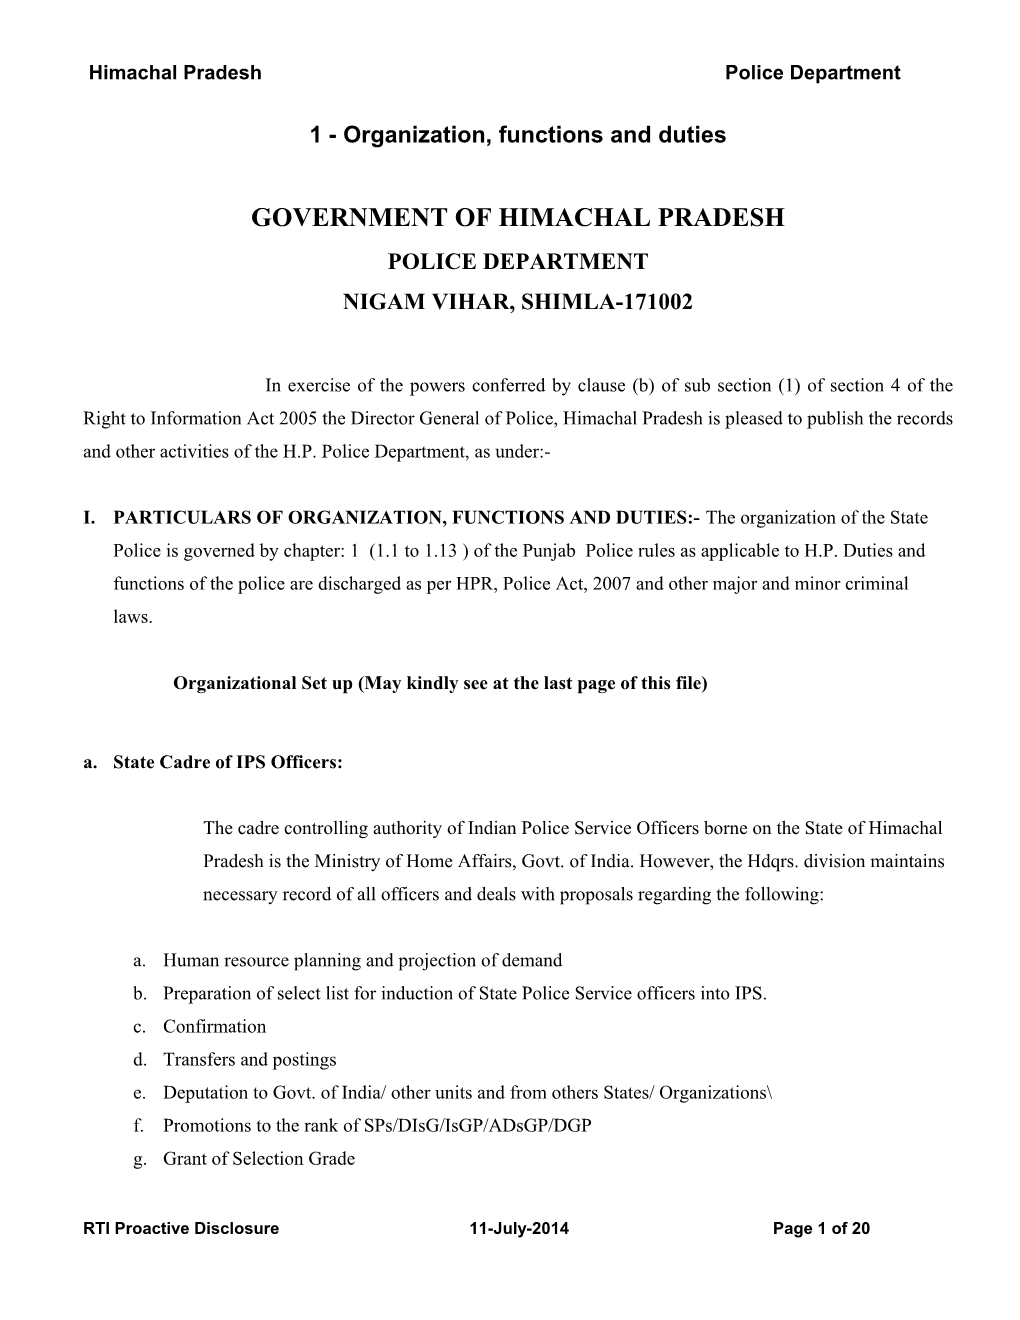 Government of Himachal Pradesh Police Department Nigam Vihar, Shimla-171002